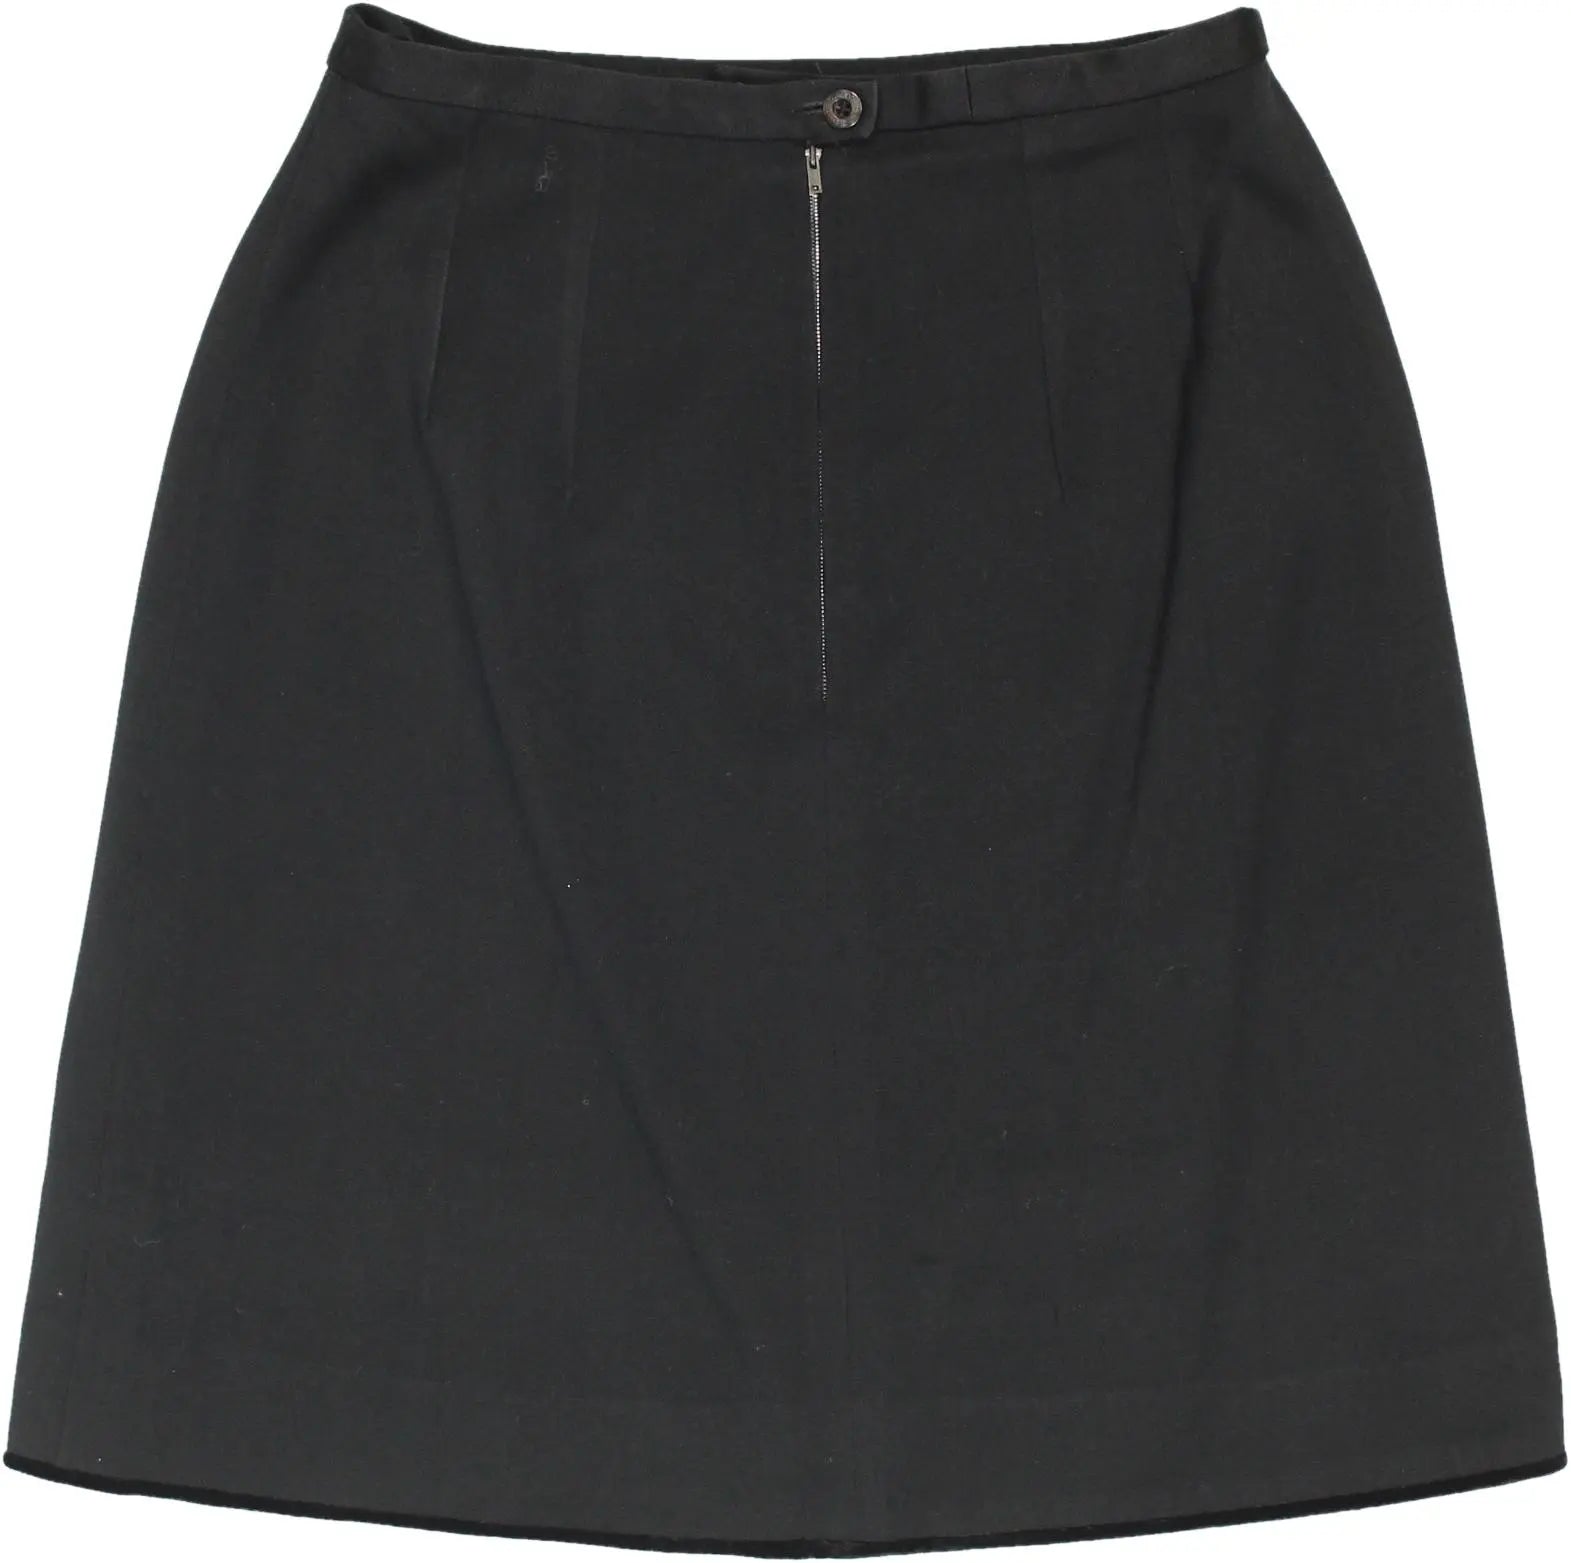 Handmade - 90s Black Skirt with Velvet Details- ThriftTale.com - Vintage and second handclothing